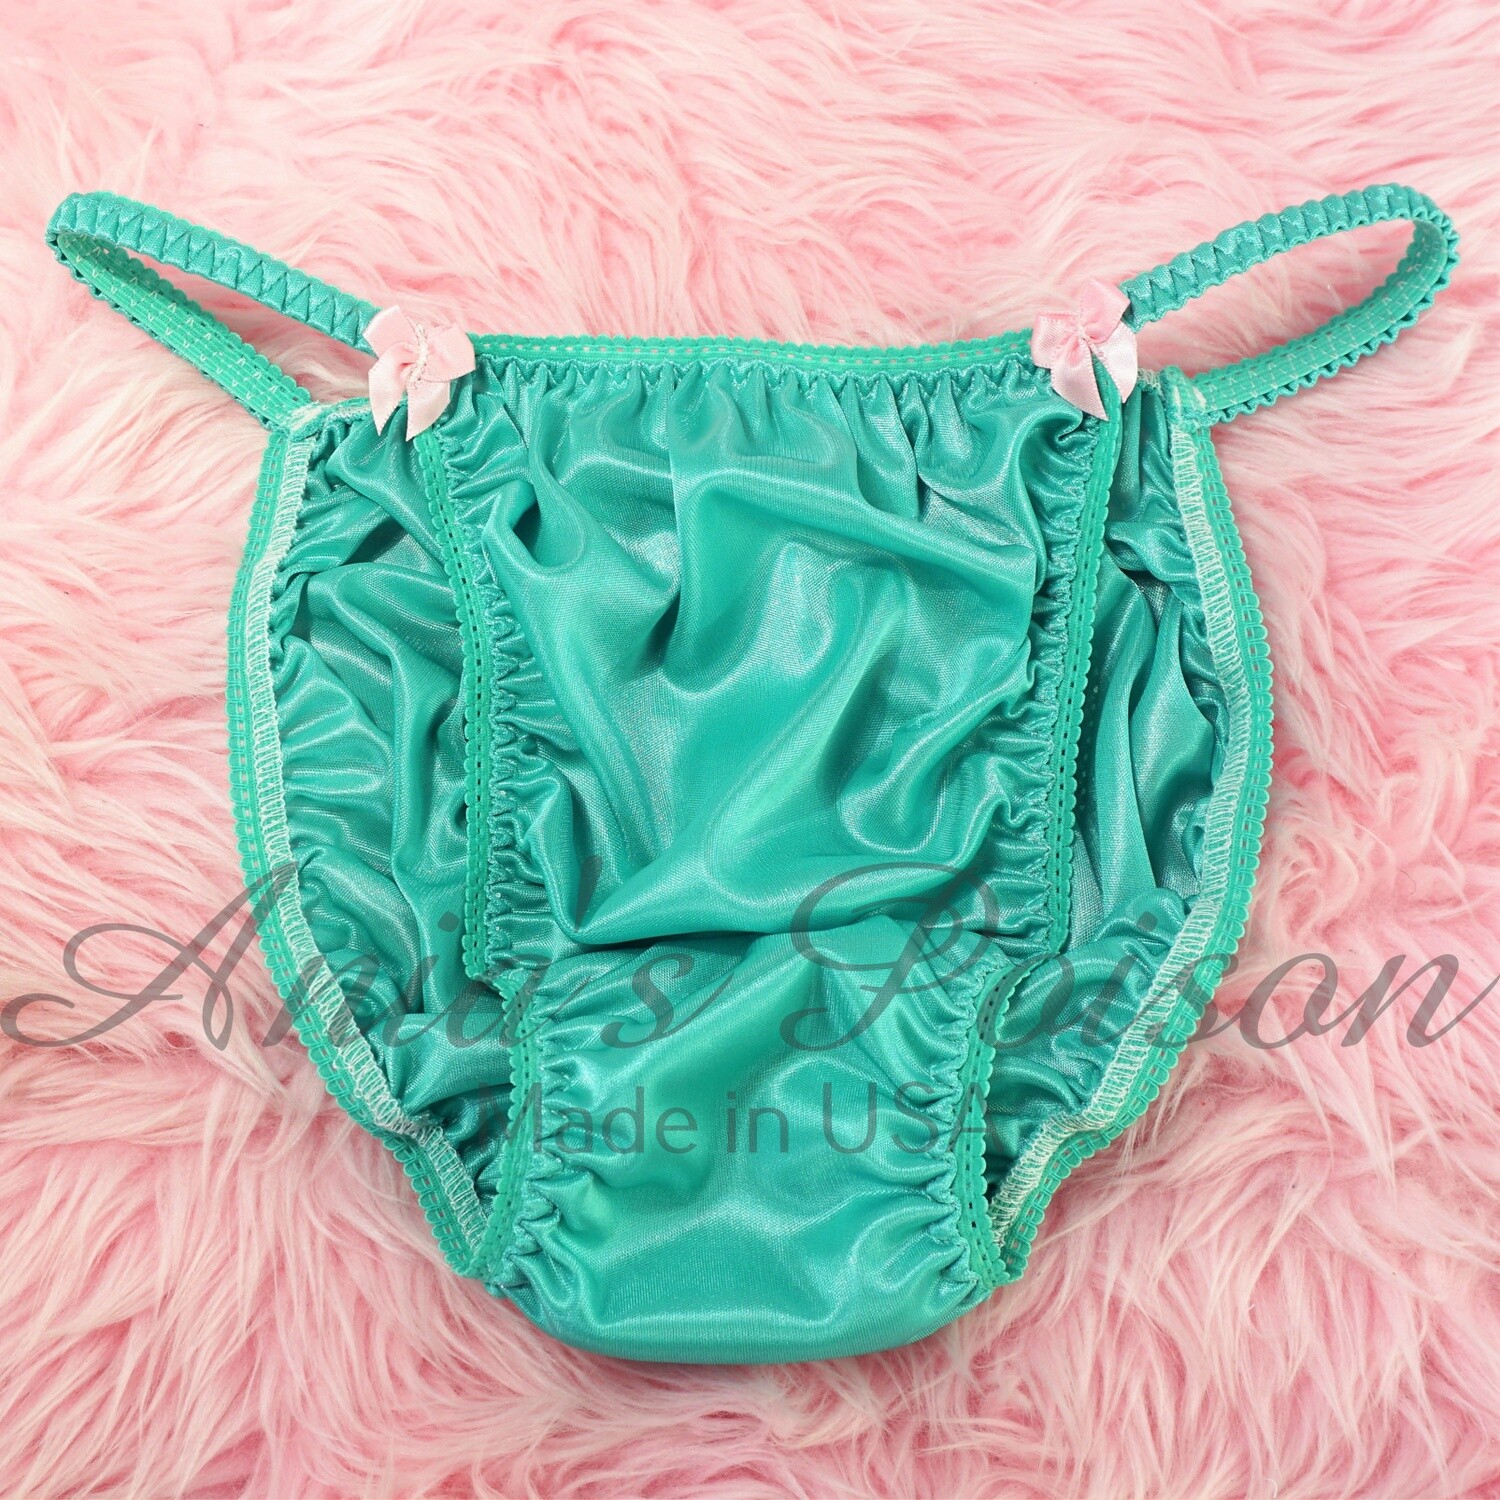 Ania's Poison MANties S - XL shiny Rare Green Butter Soft polyester string bikini sissy men's underwear panties